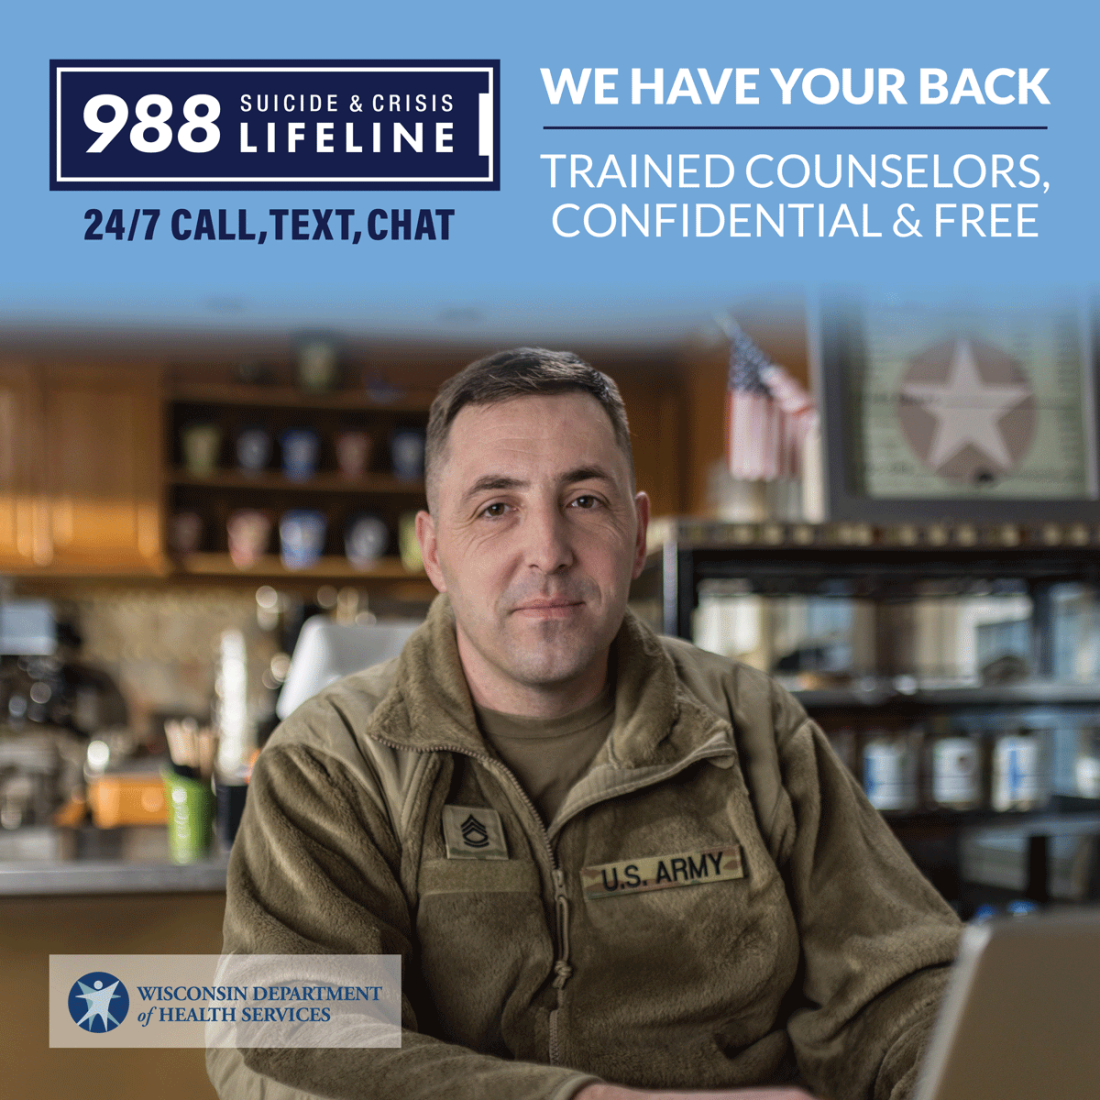 Army veteran - We have your back - 988 Suicide & Crisis Lifeline